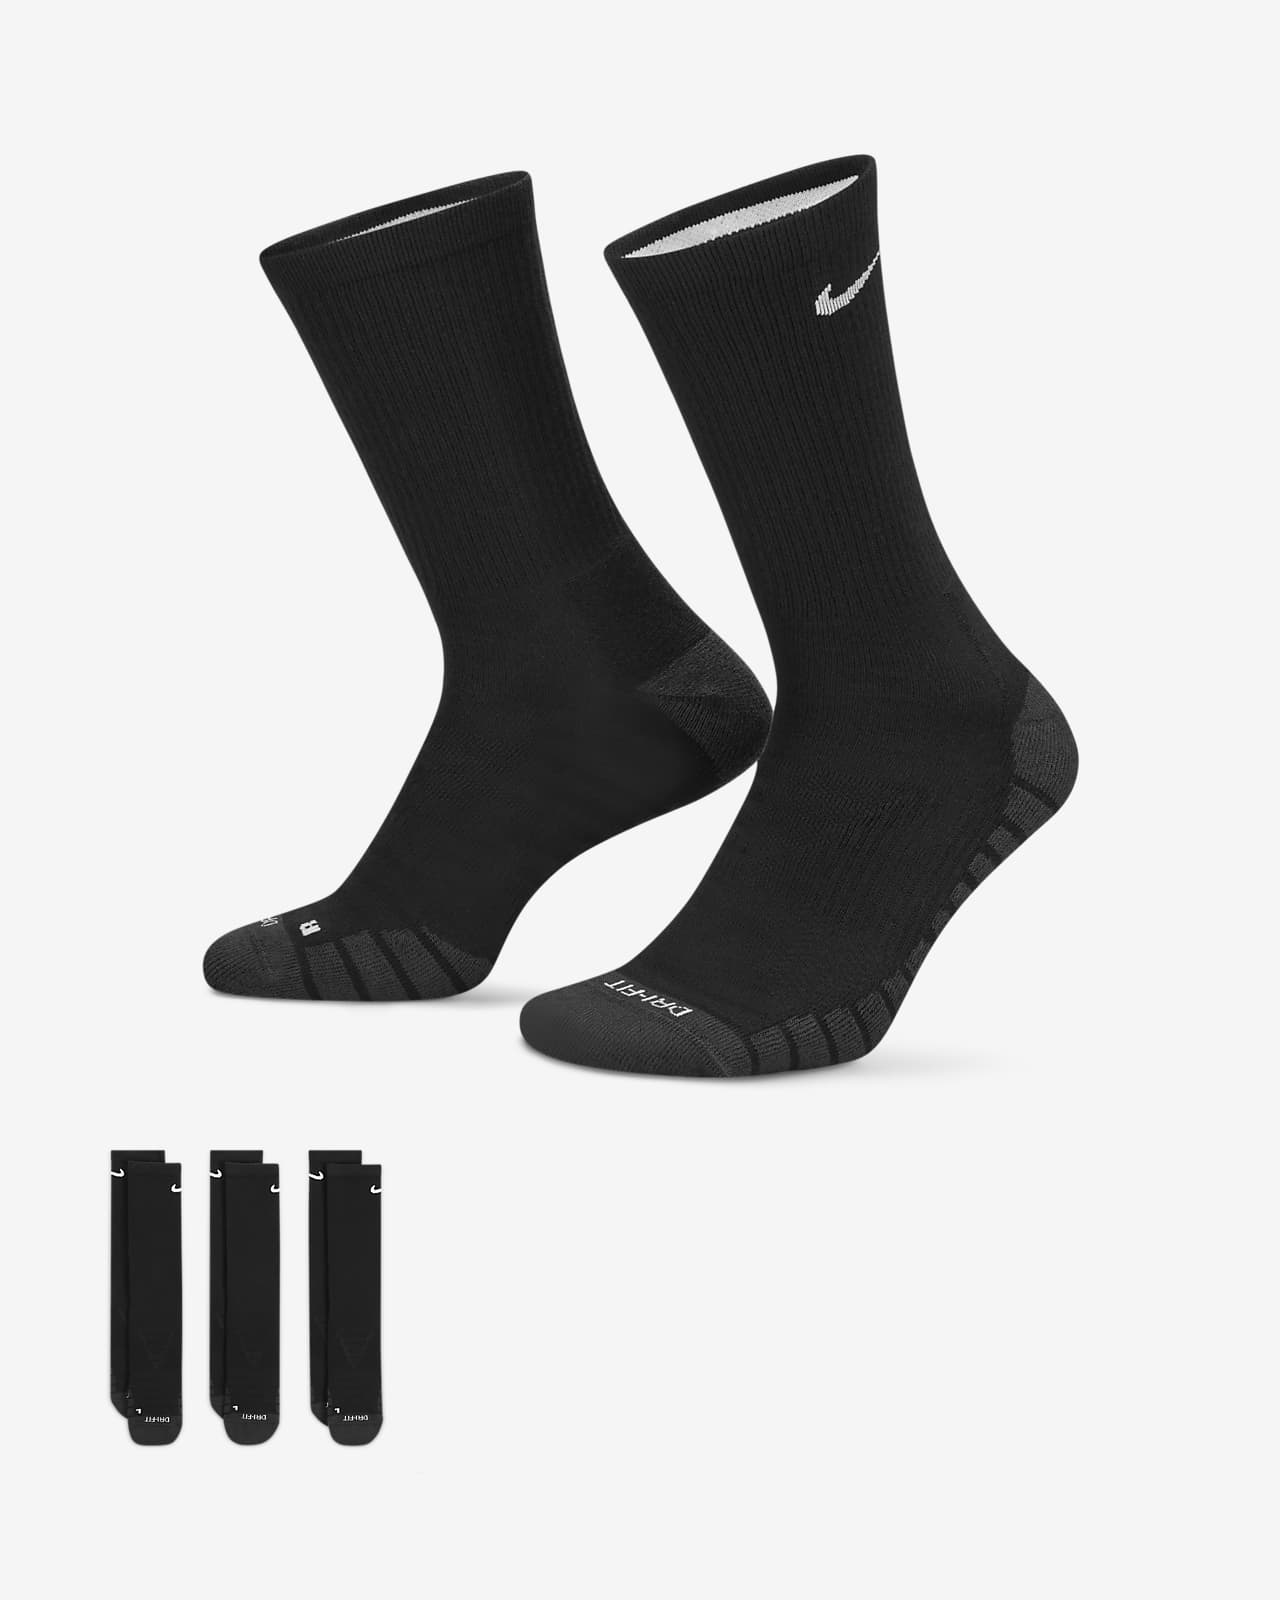 Nike - Jordan Ultimate Flight - Chaussettes - Homme - Noir - 34-38 EU (S) :  : Mode